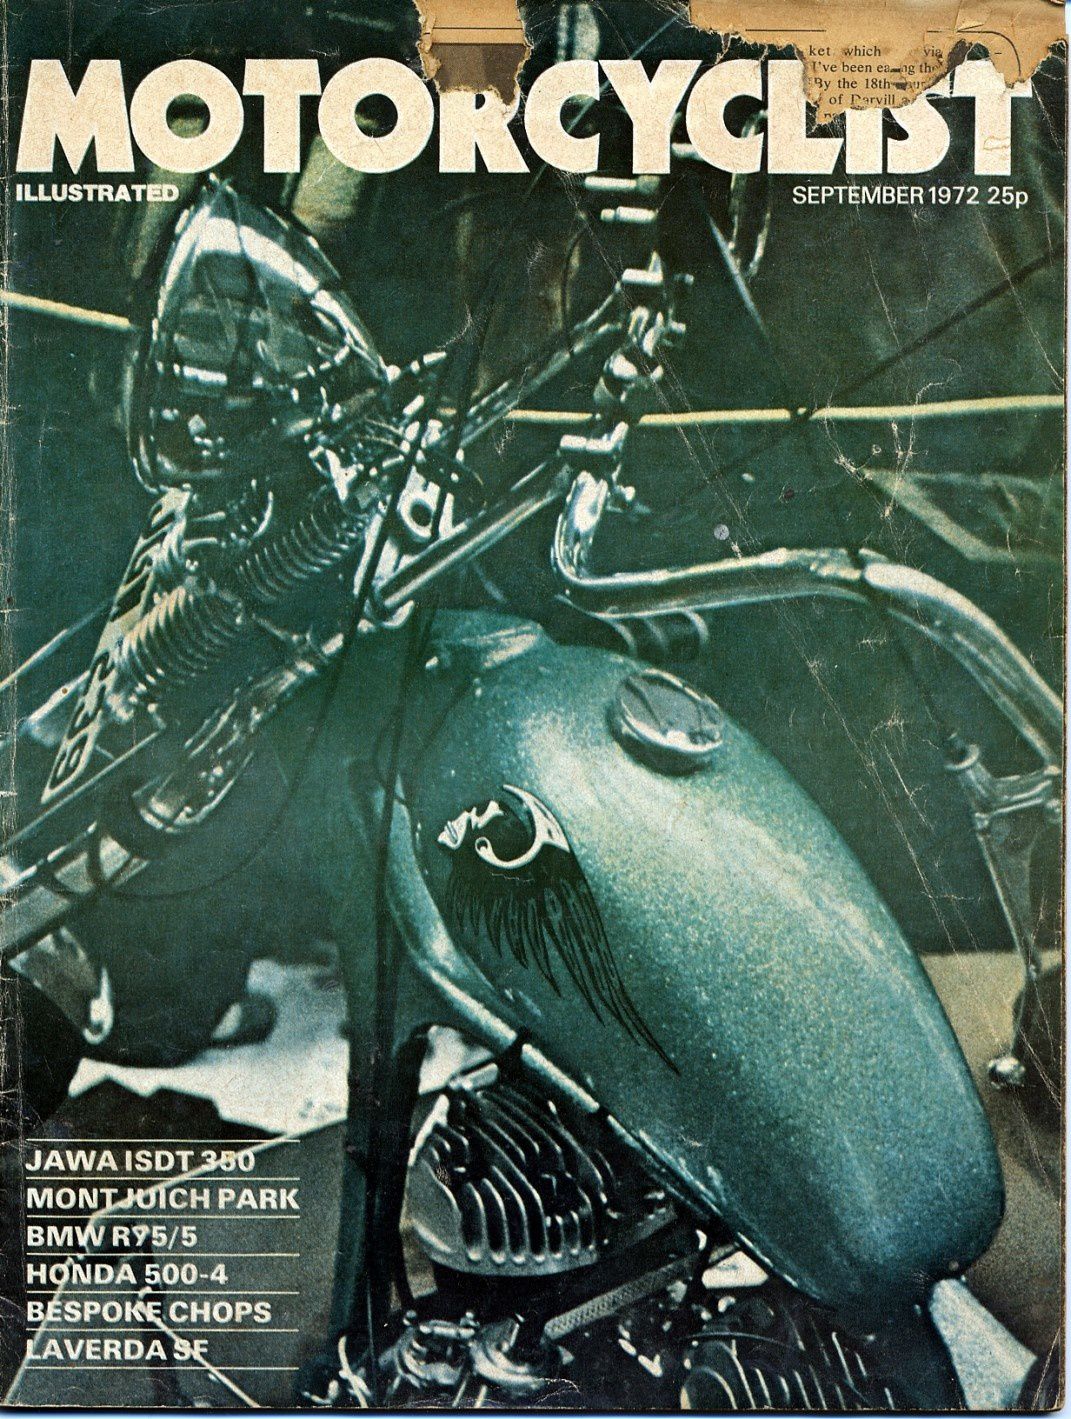 MOTORCYCLIST ILLUSTRATED september 1972